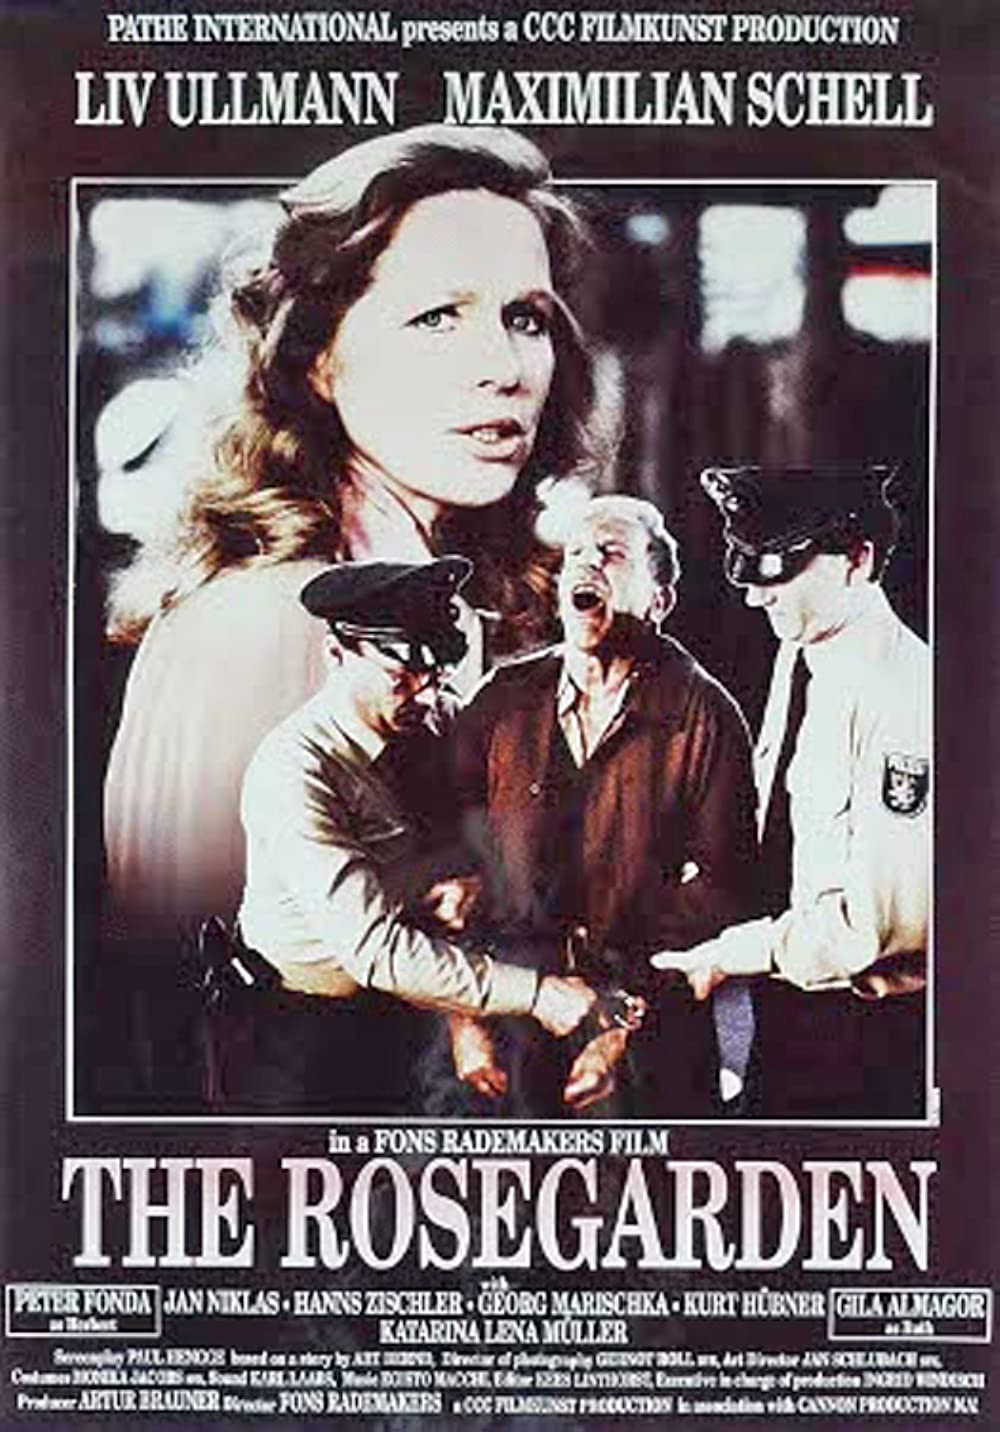 Filmbeschreibung zu Der Rosengarten